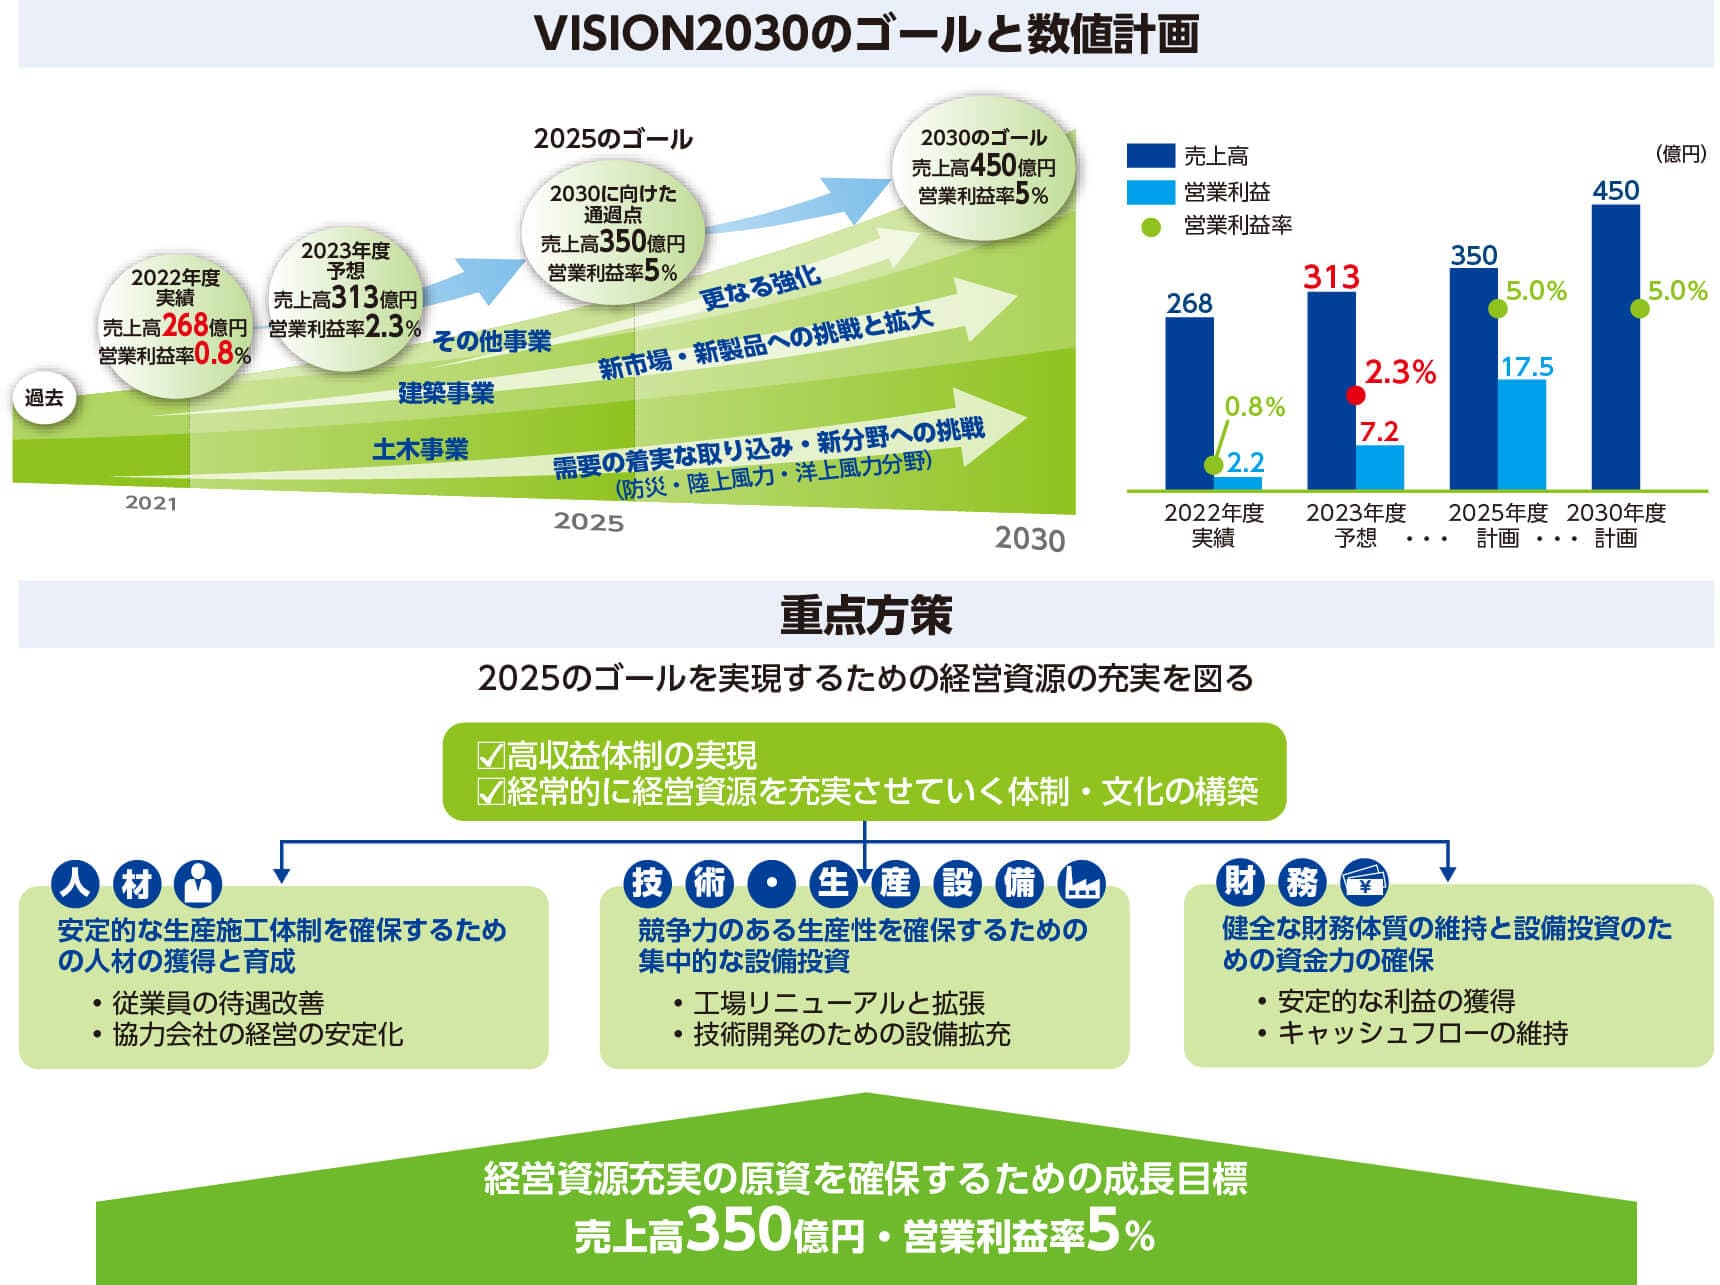 第5次中期経営計画「VISION2030」